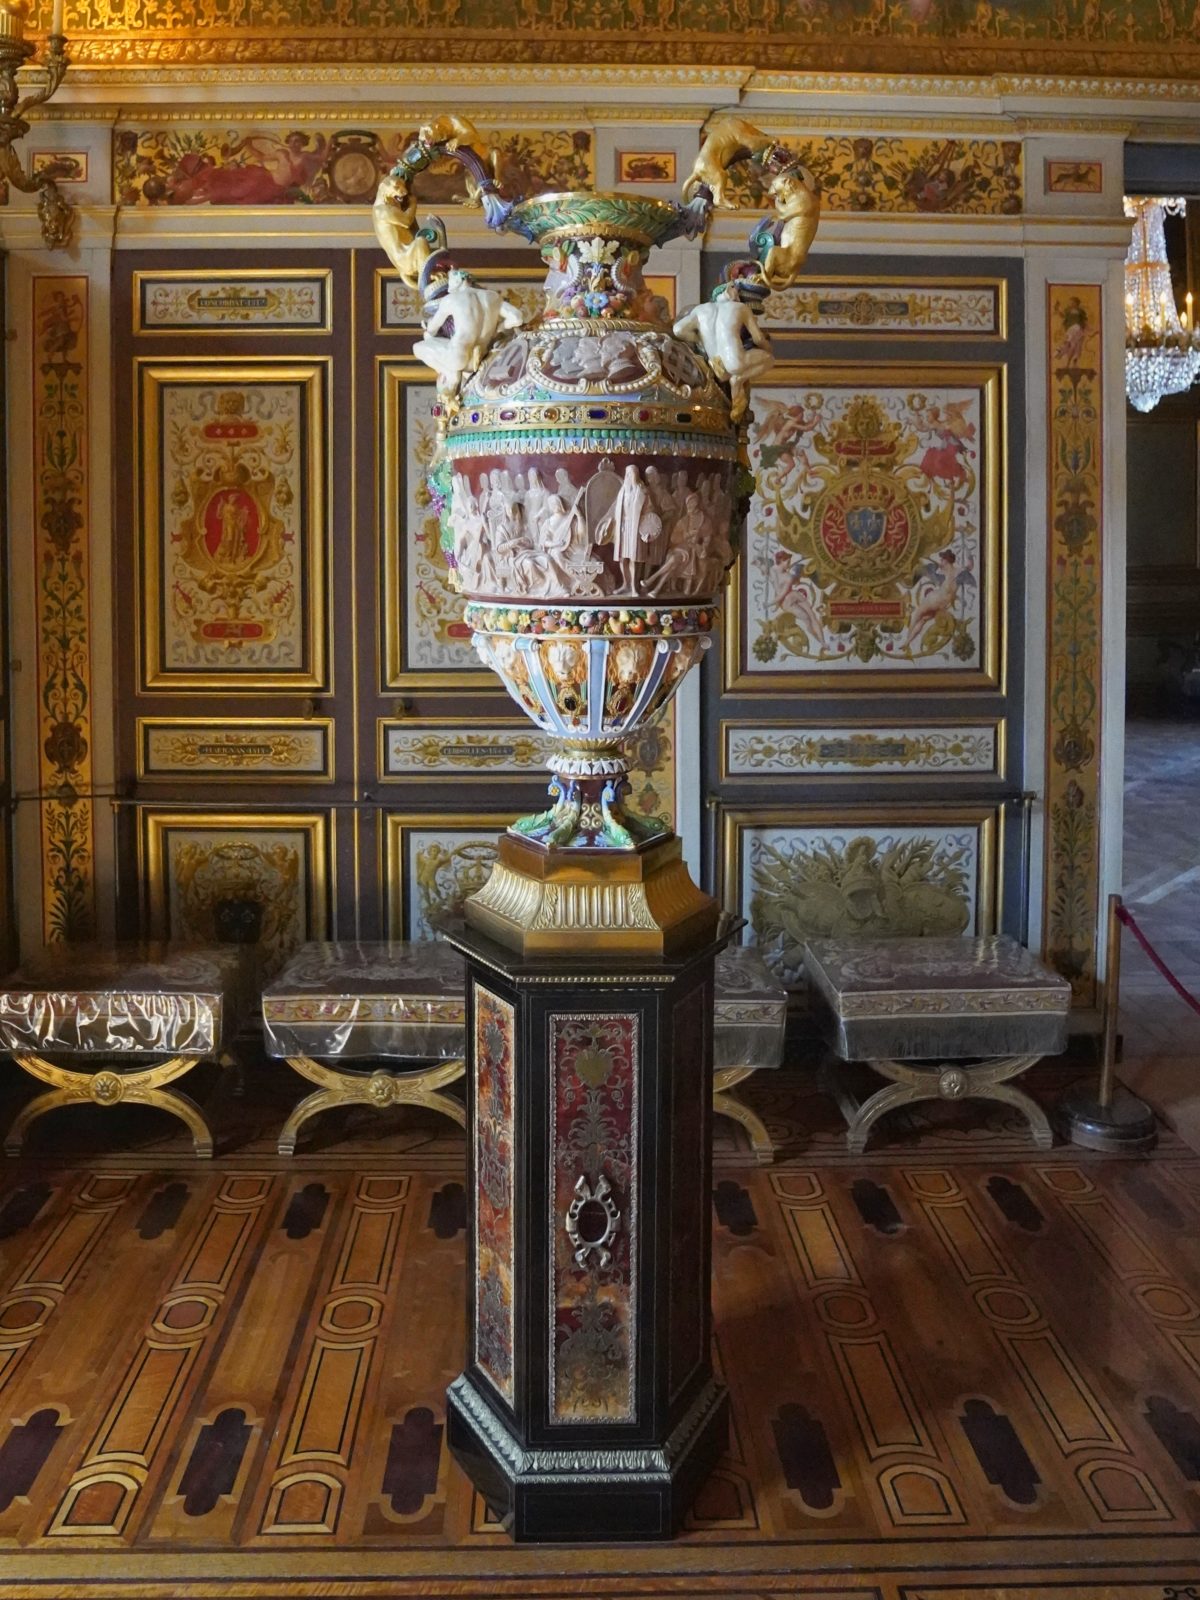 Ornate vase